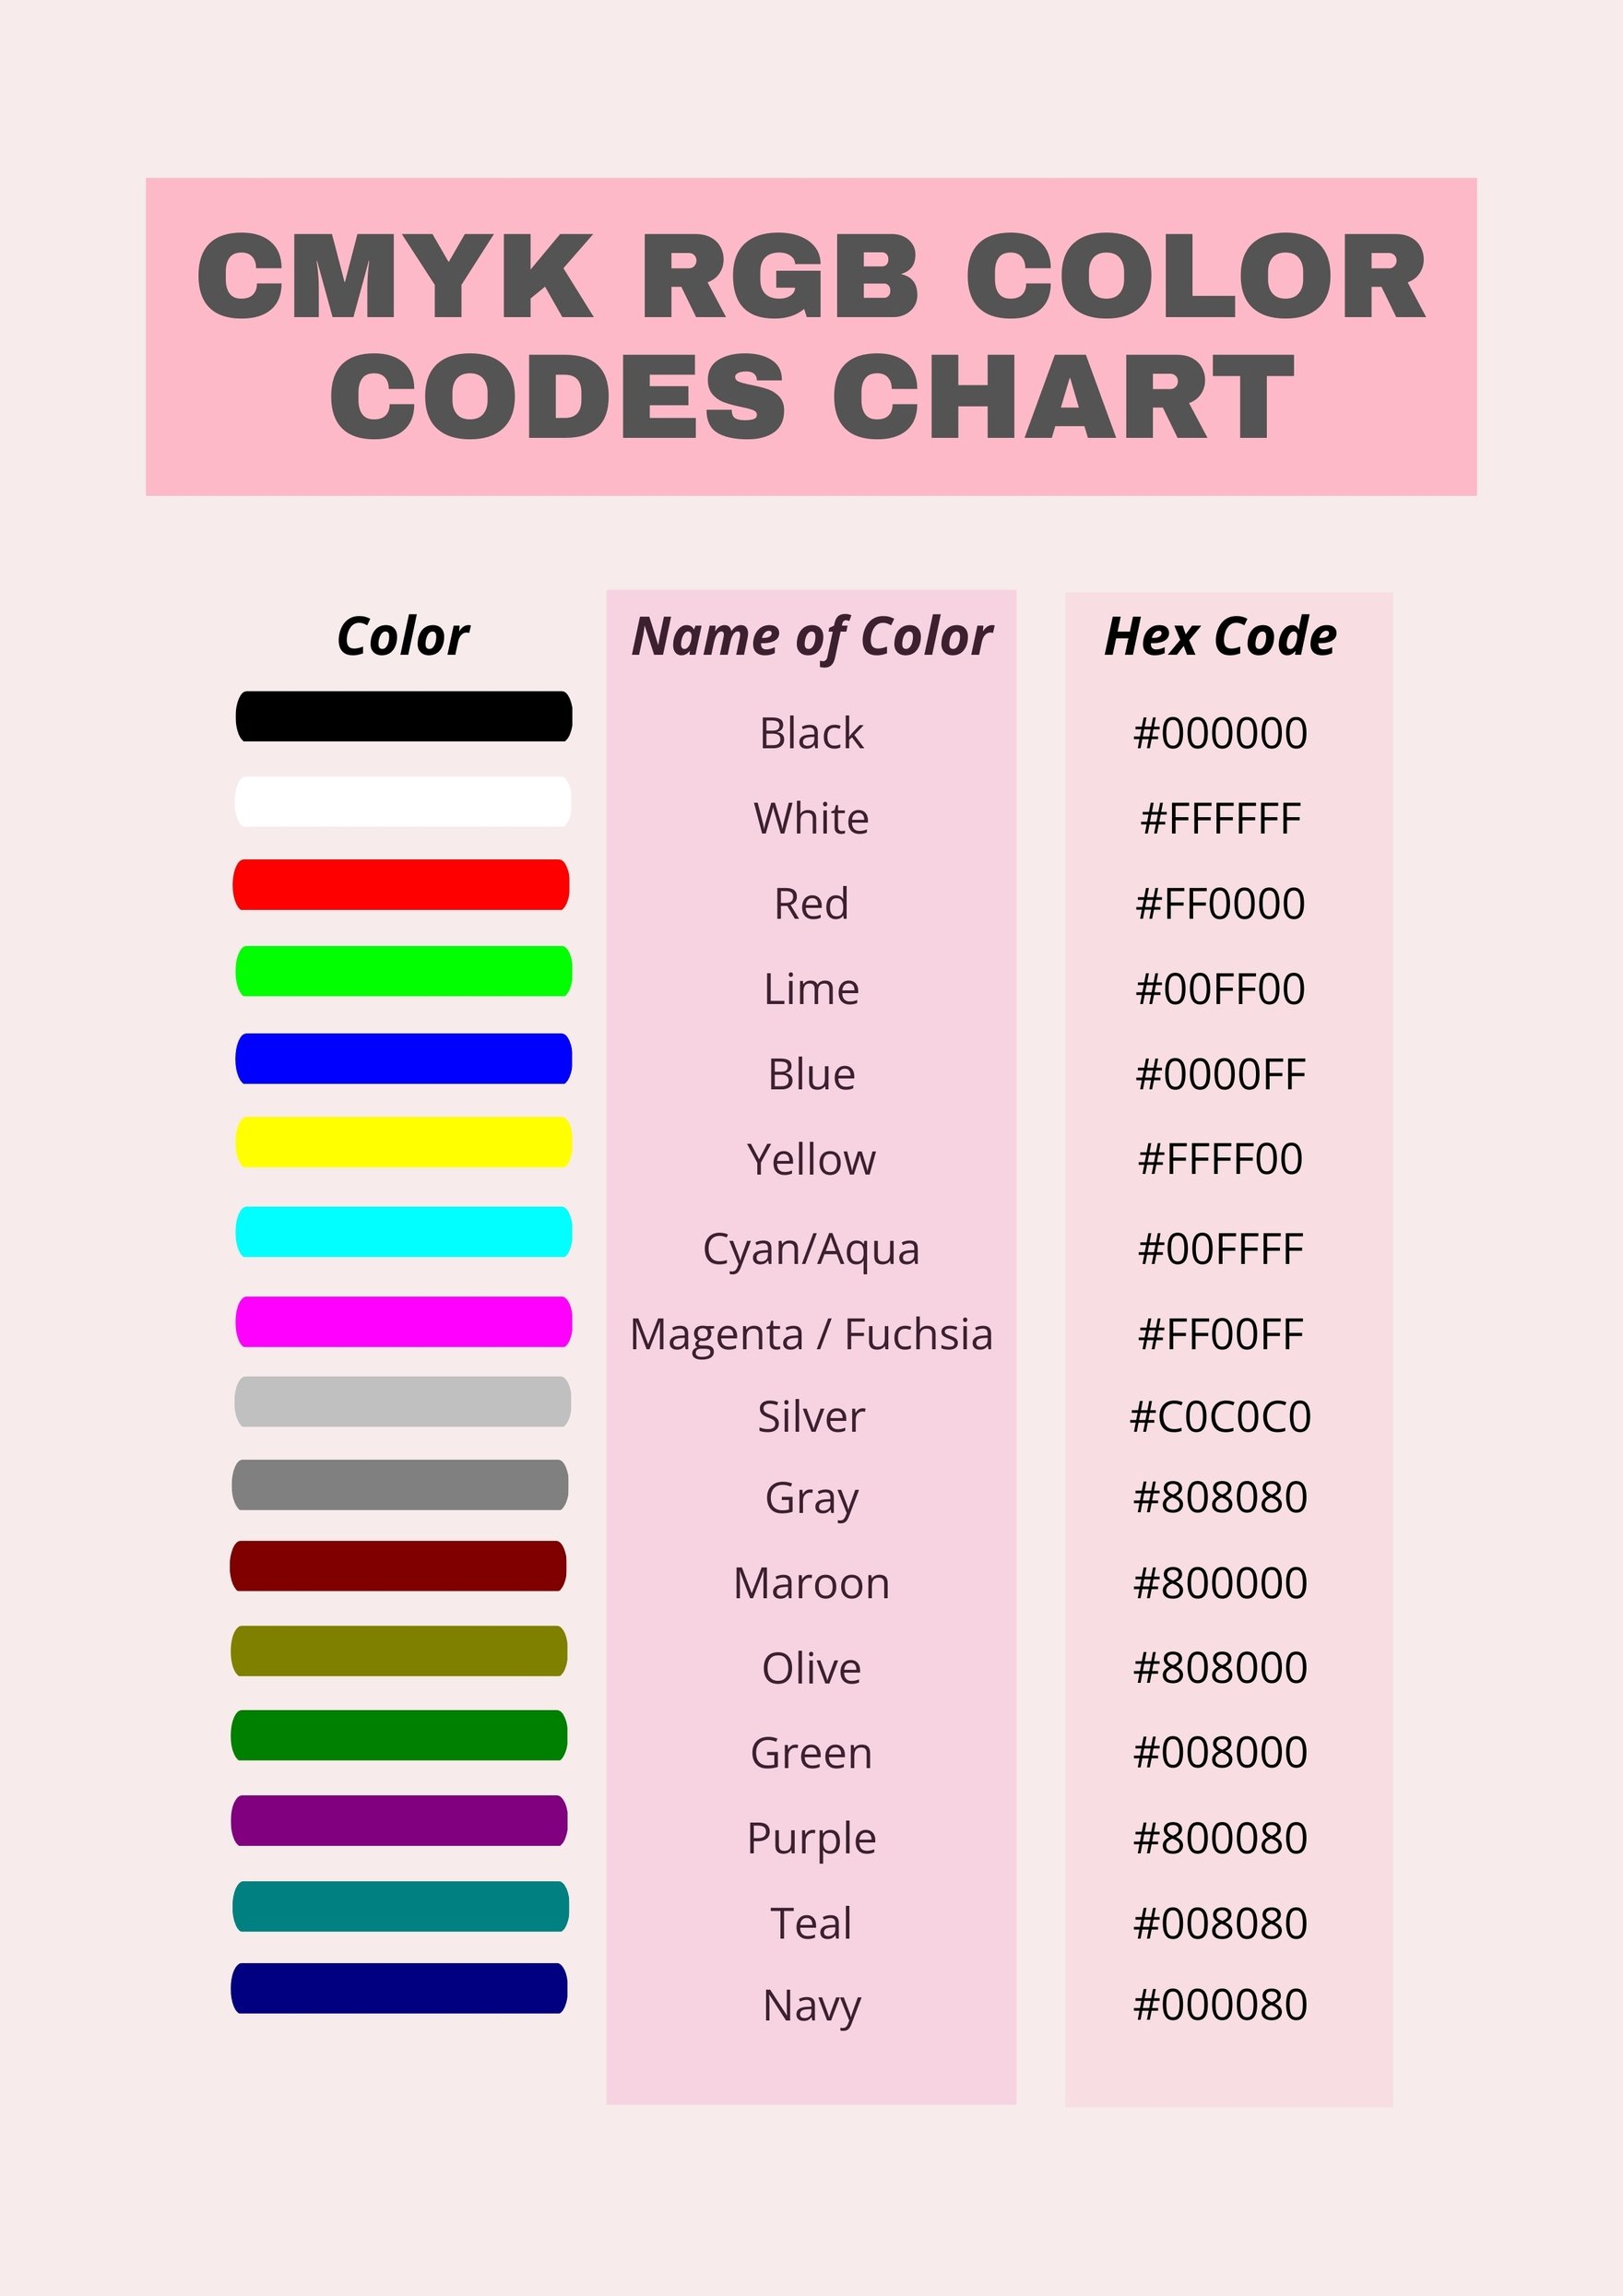 CMYK RGB Color Codes Chart